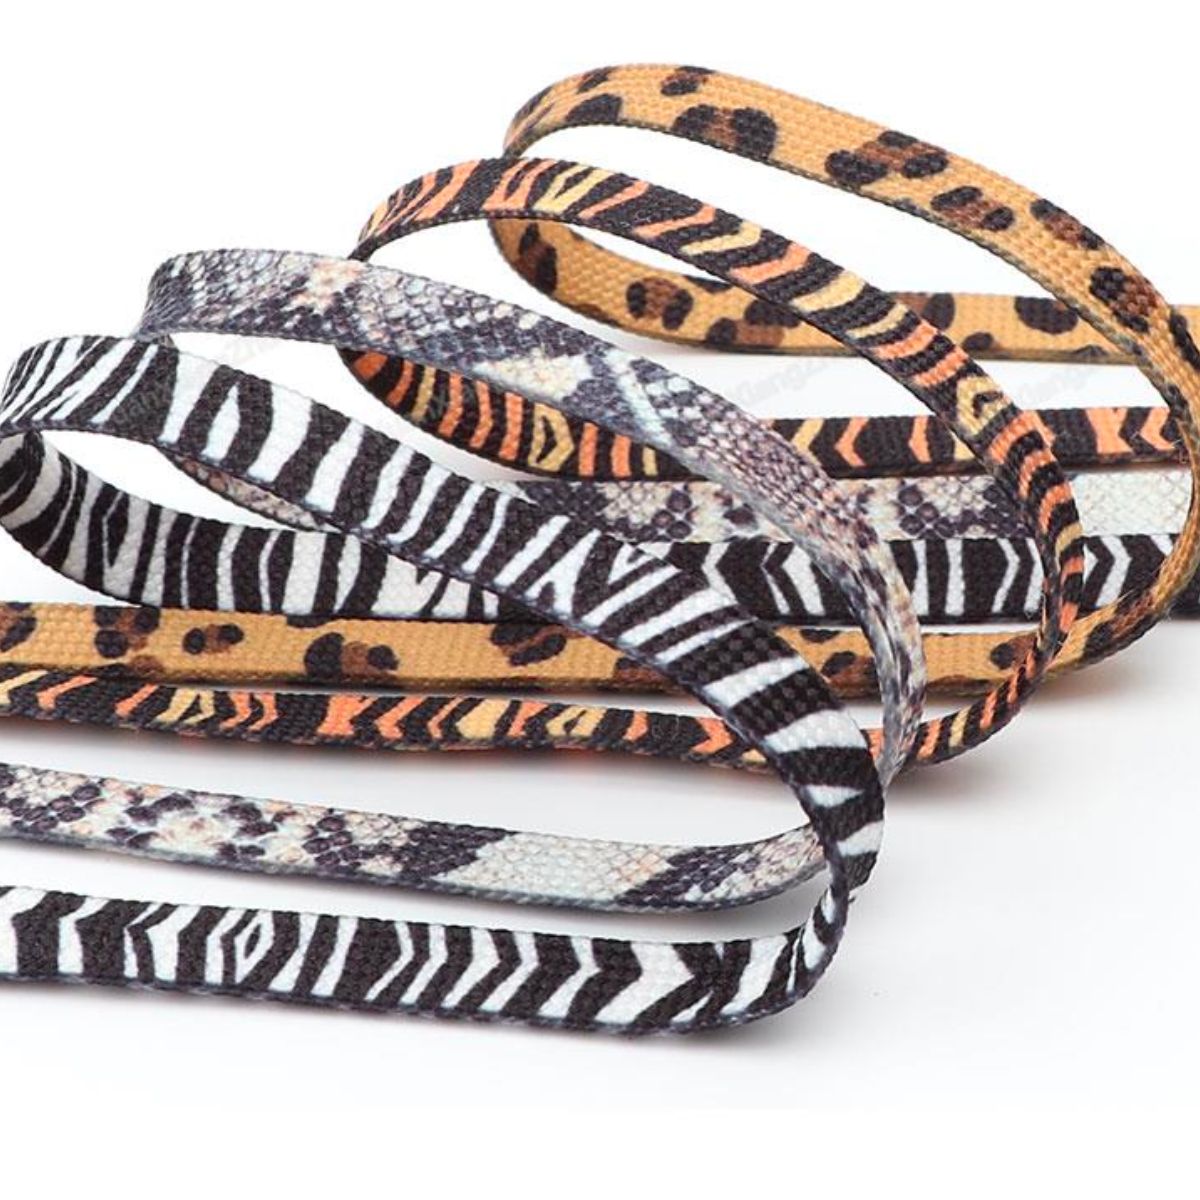 Animal Print Shoelaces - Kicks Shoelaces